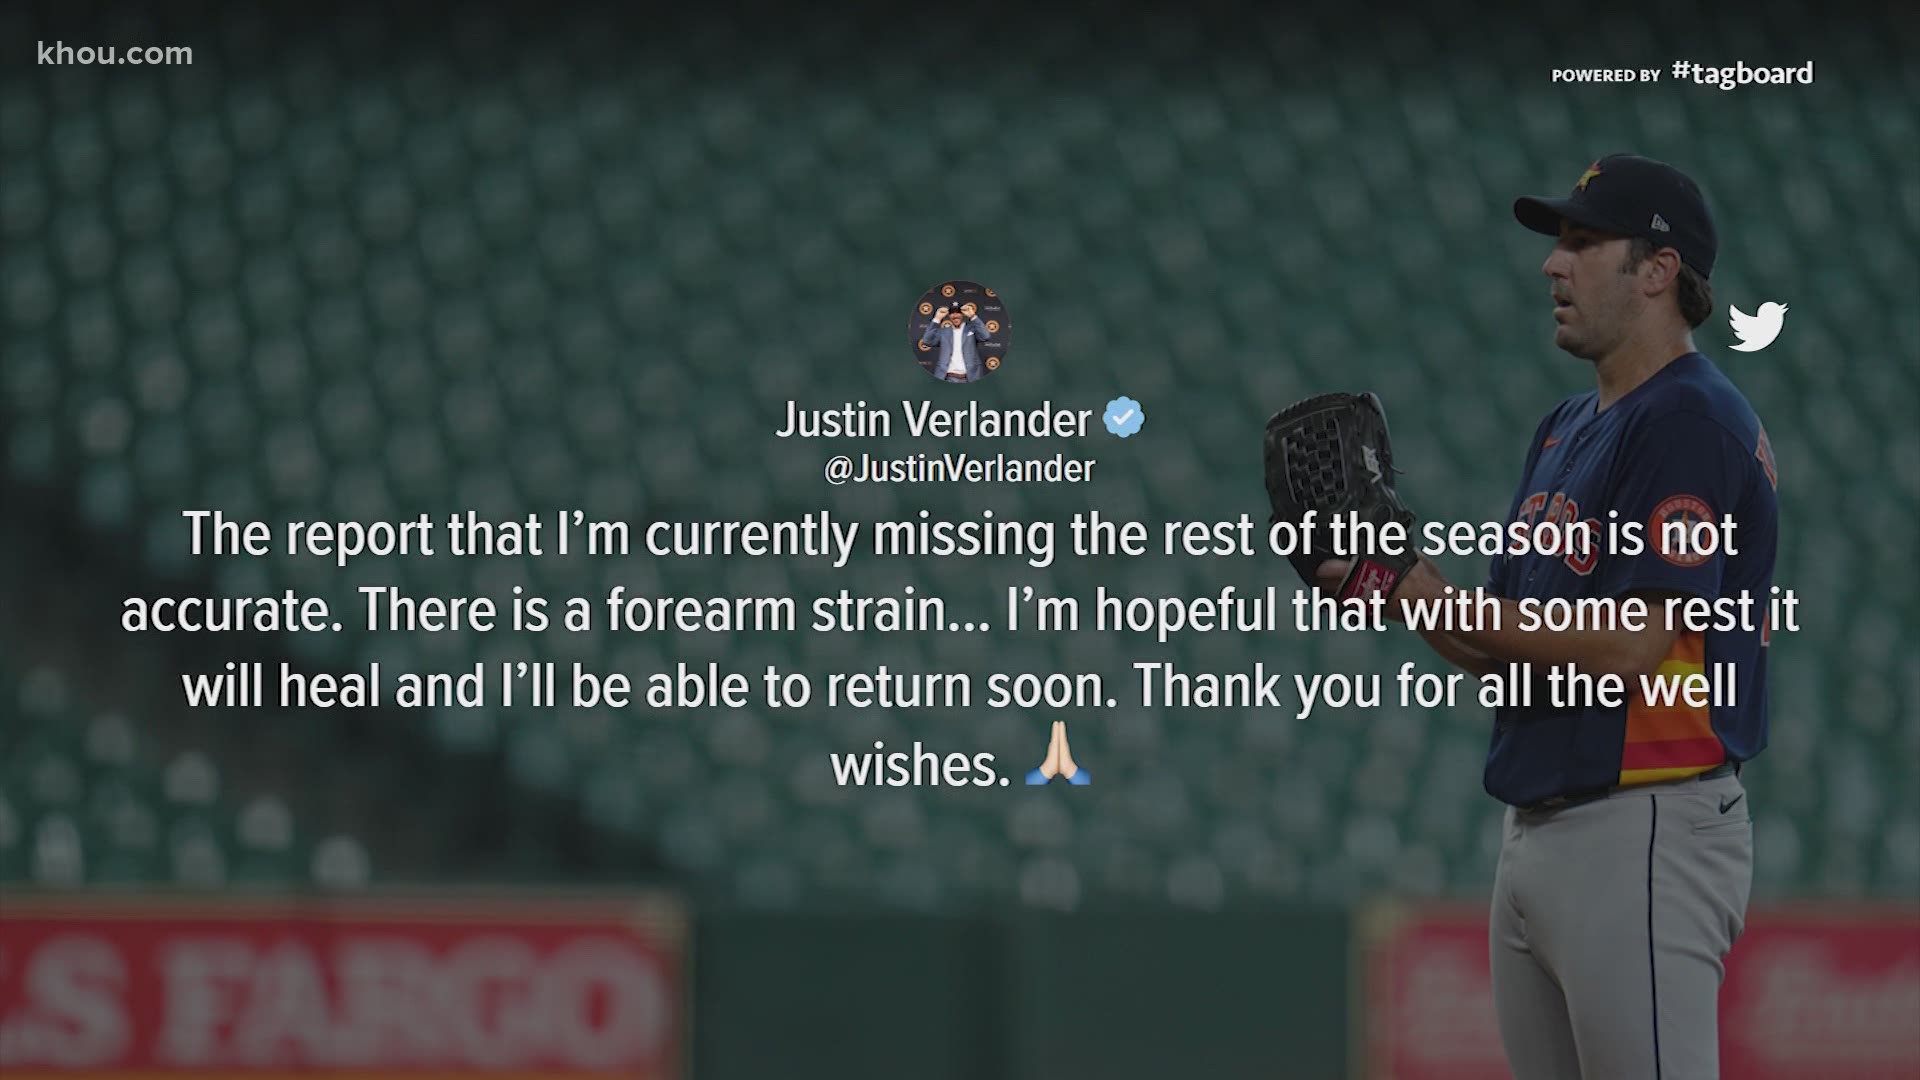 Astros ace Justin Verlander has surgery on groin